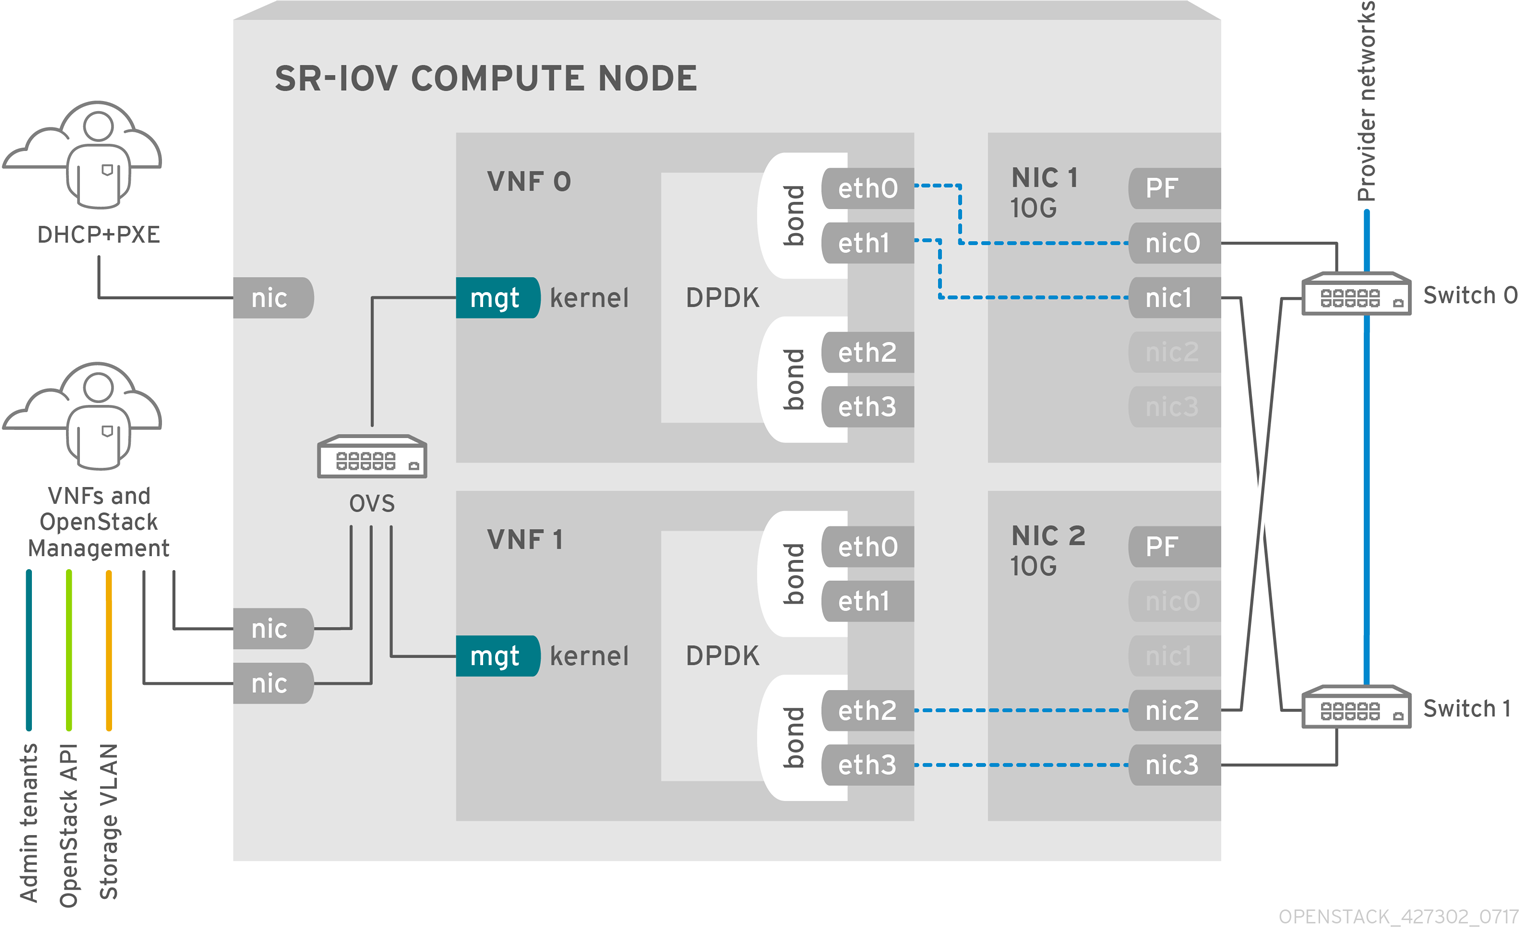 NFV SR-IOV deployment